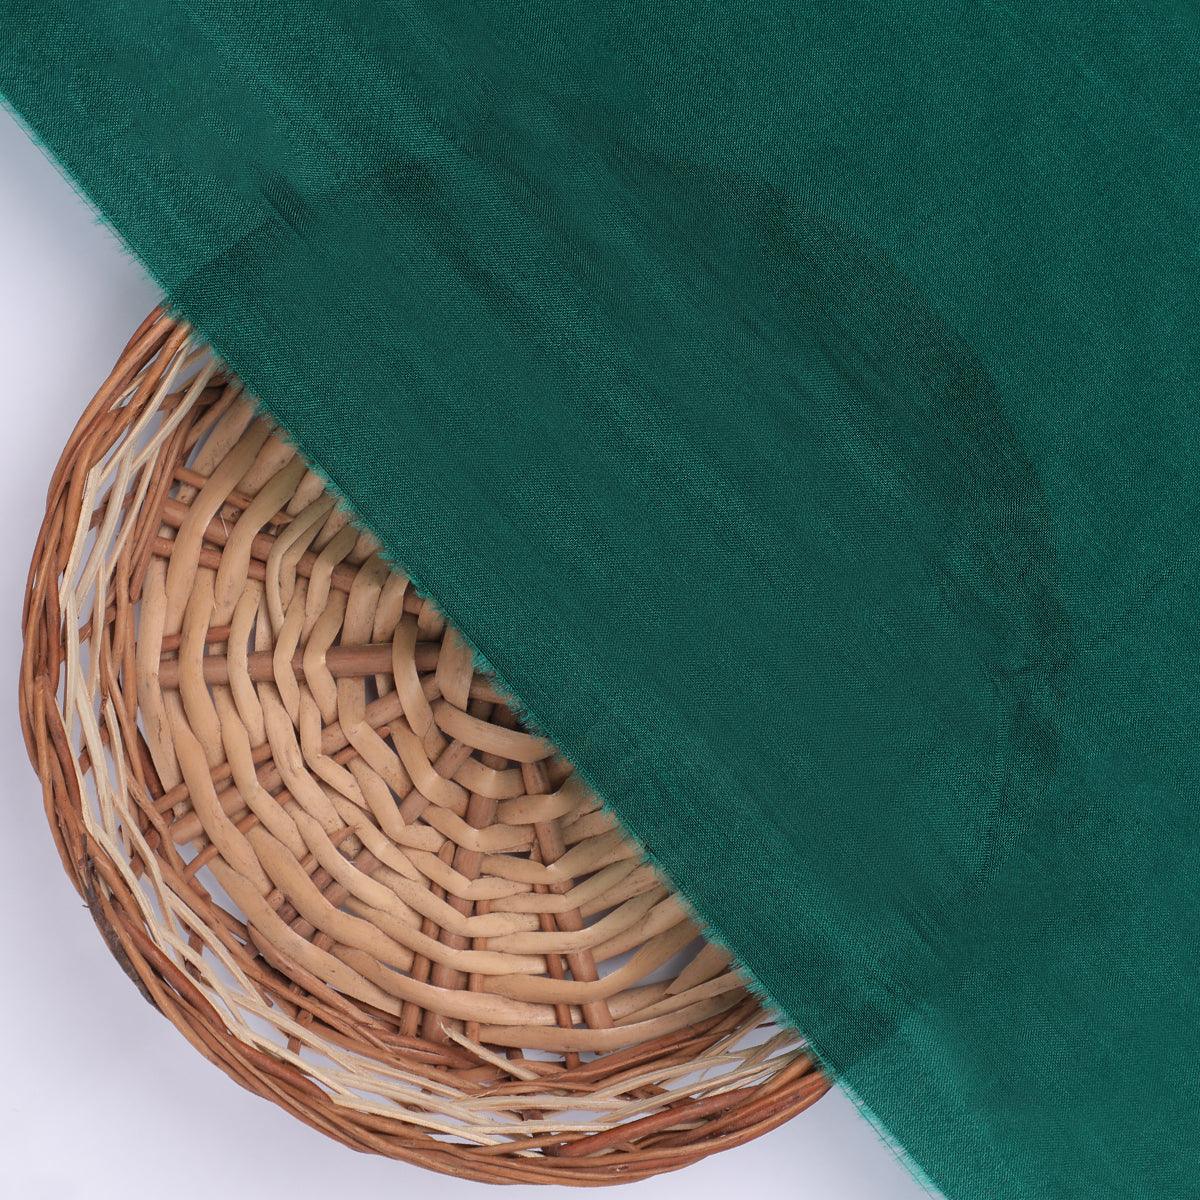 Bottel Green Colour Pure Upada Plain Dyed Fabric - FAB VOGUE Studio®